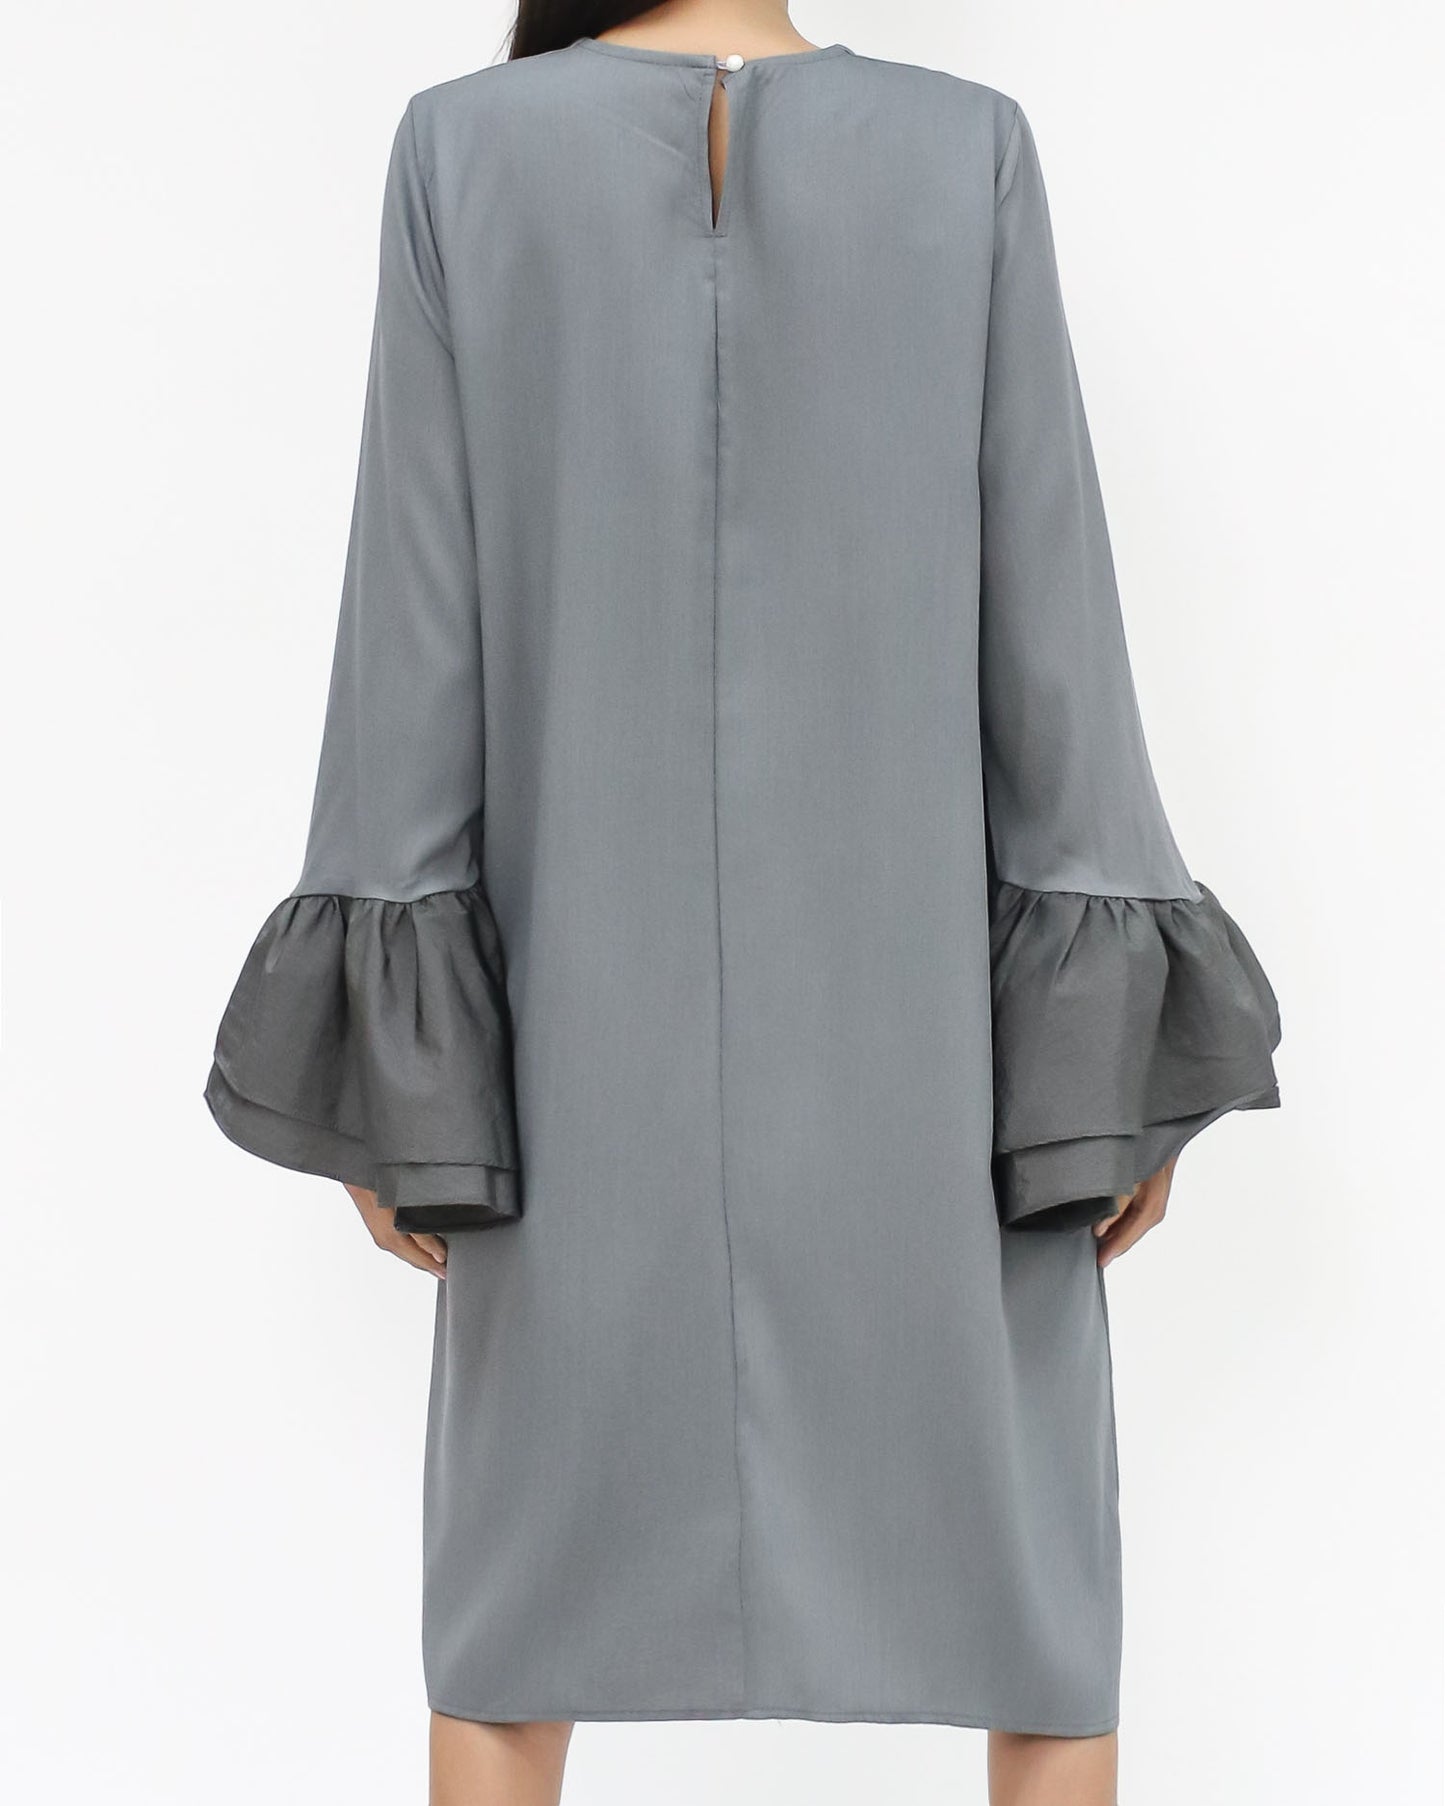 grey shirt dress w/ layers sleeves *pre-order*